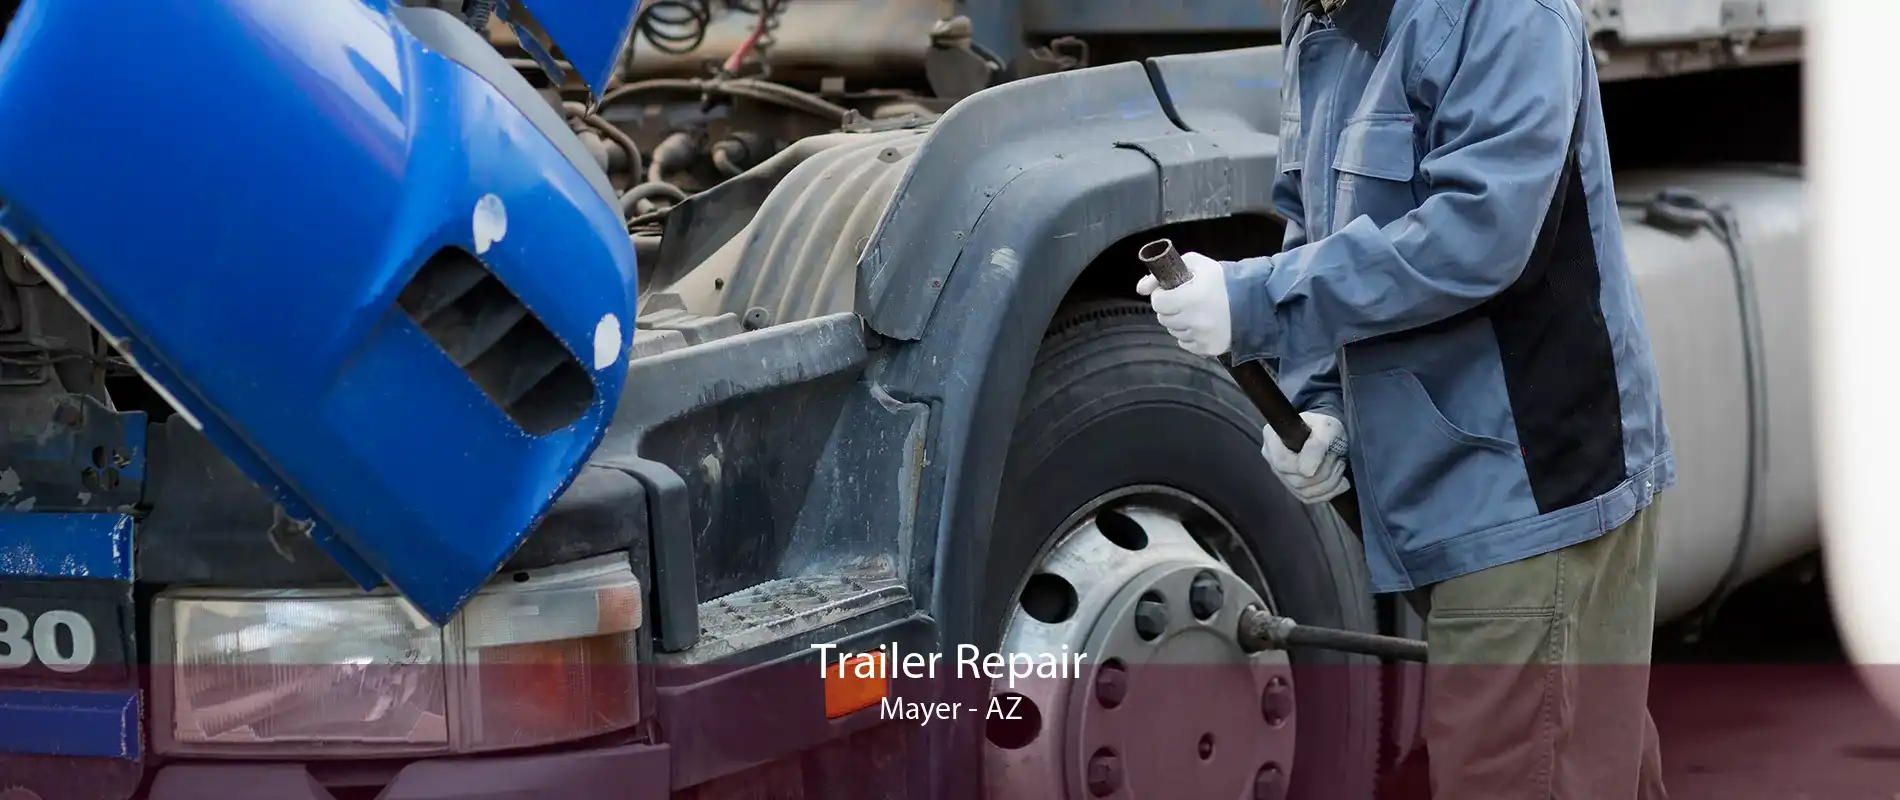 Trailer Repair Mayer - AZ